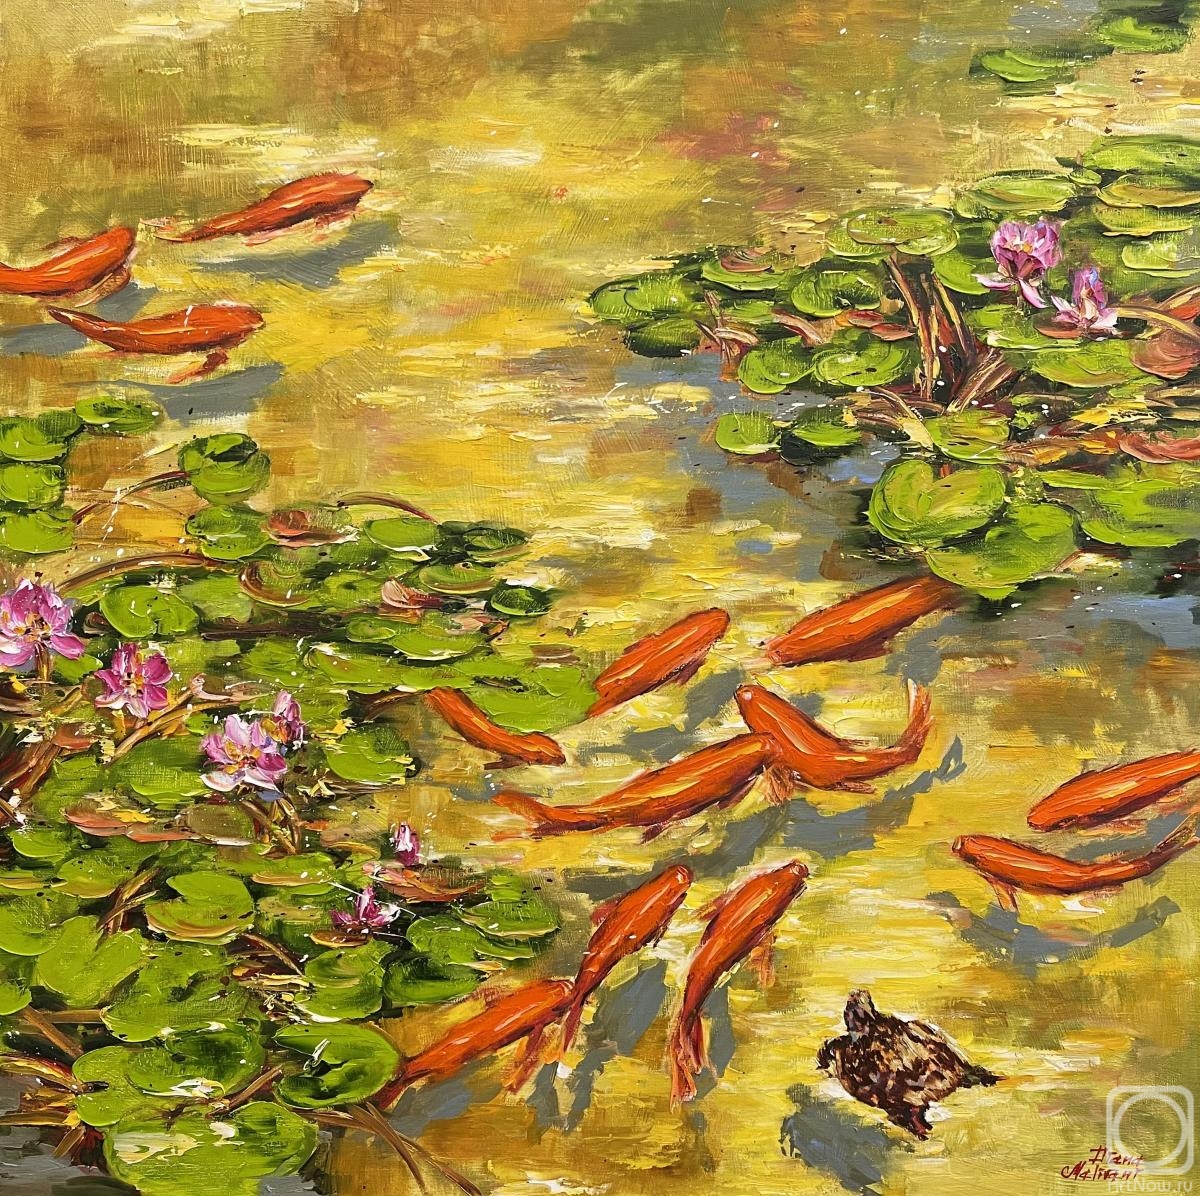 Malivani Diana. Koi Fish Pond and a Little Turtle